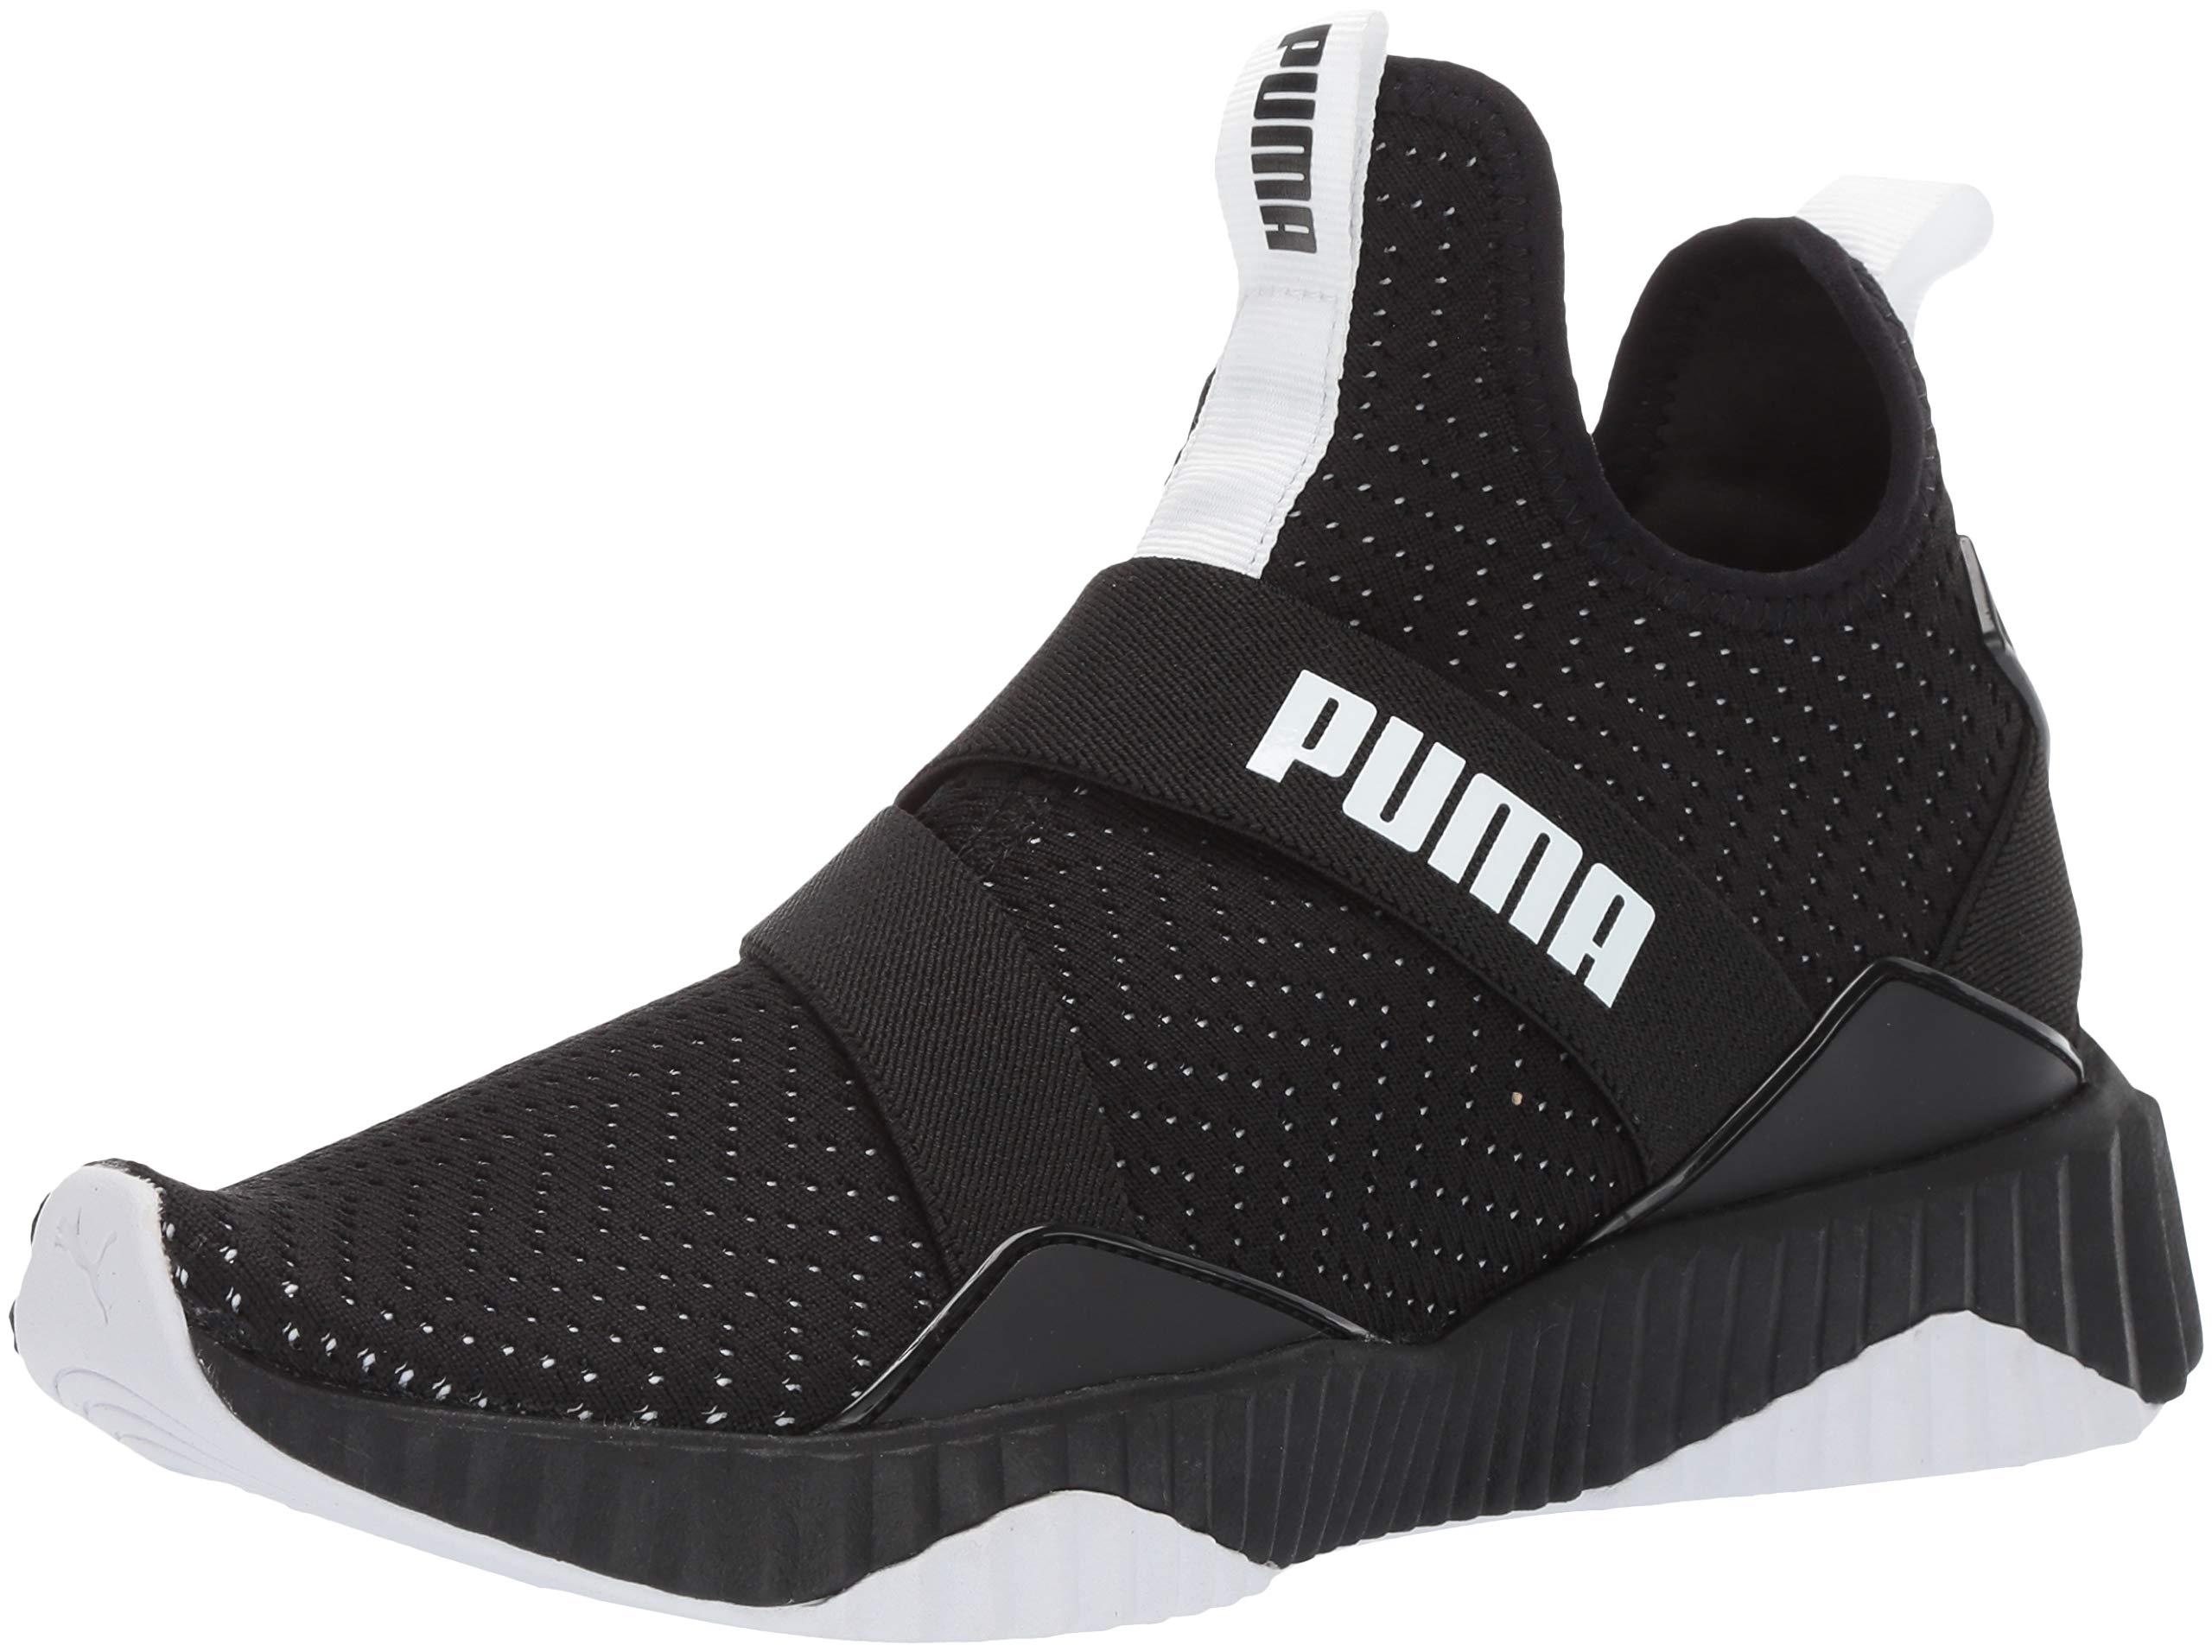 PUMA Defy Mid Core Shoes in Black/White 